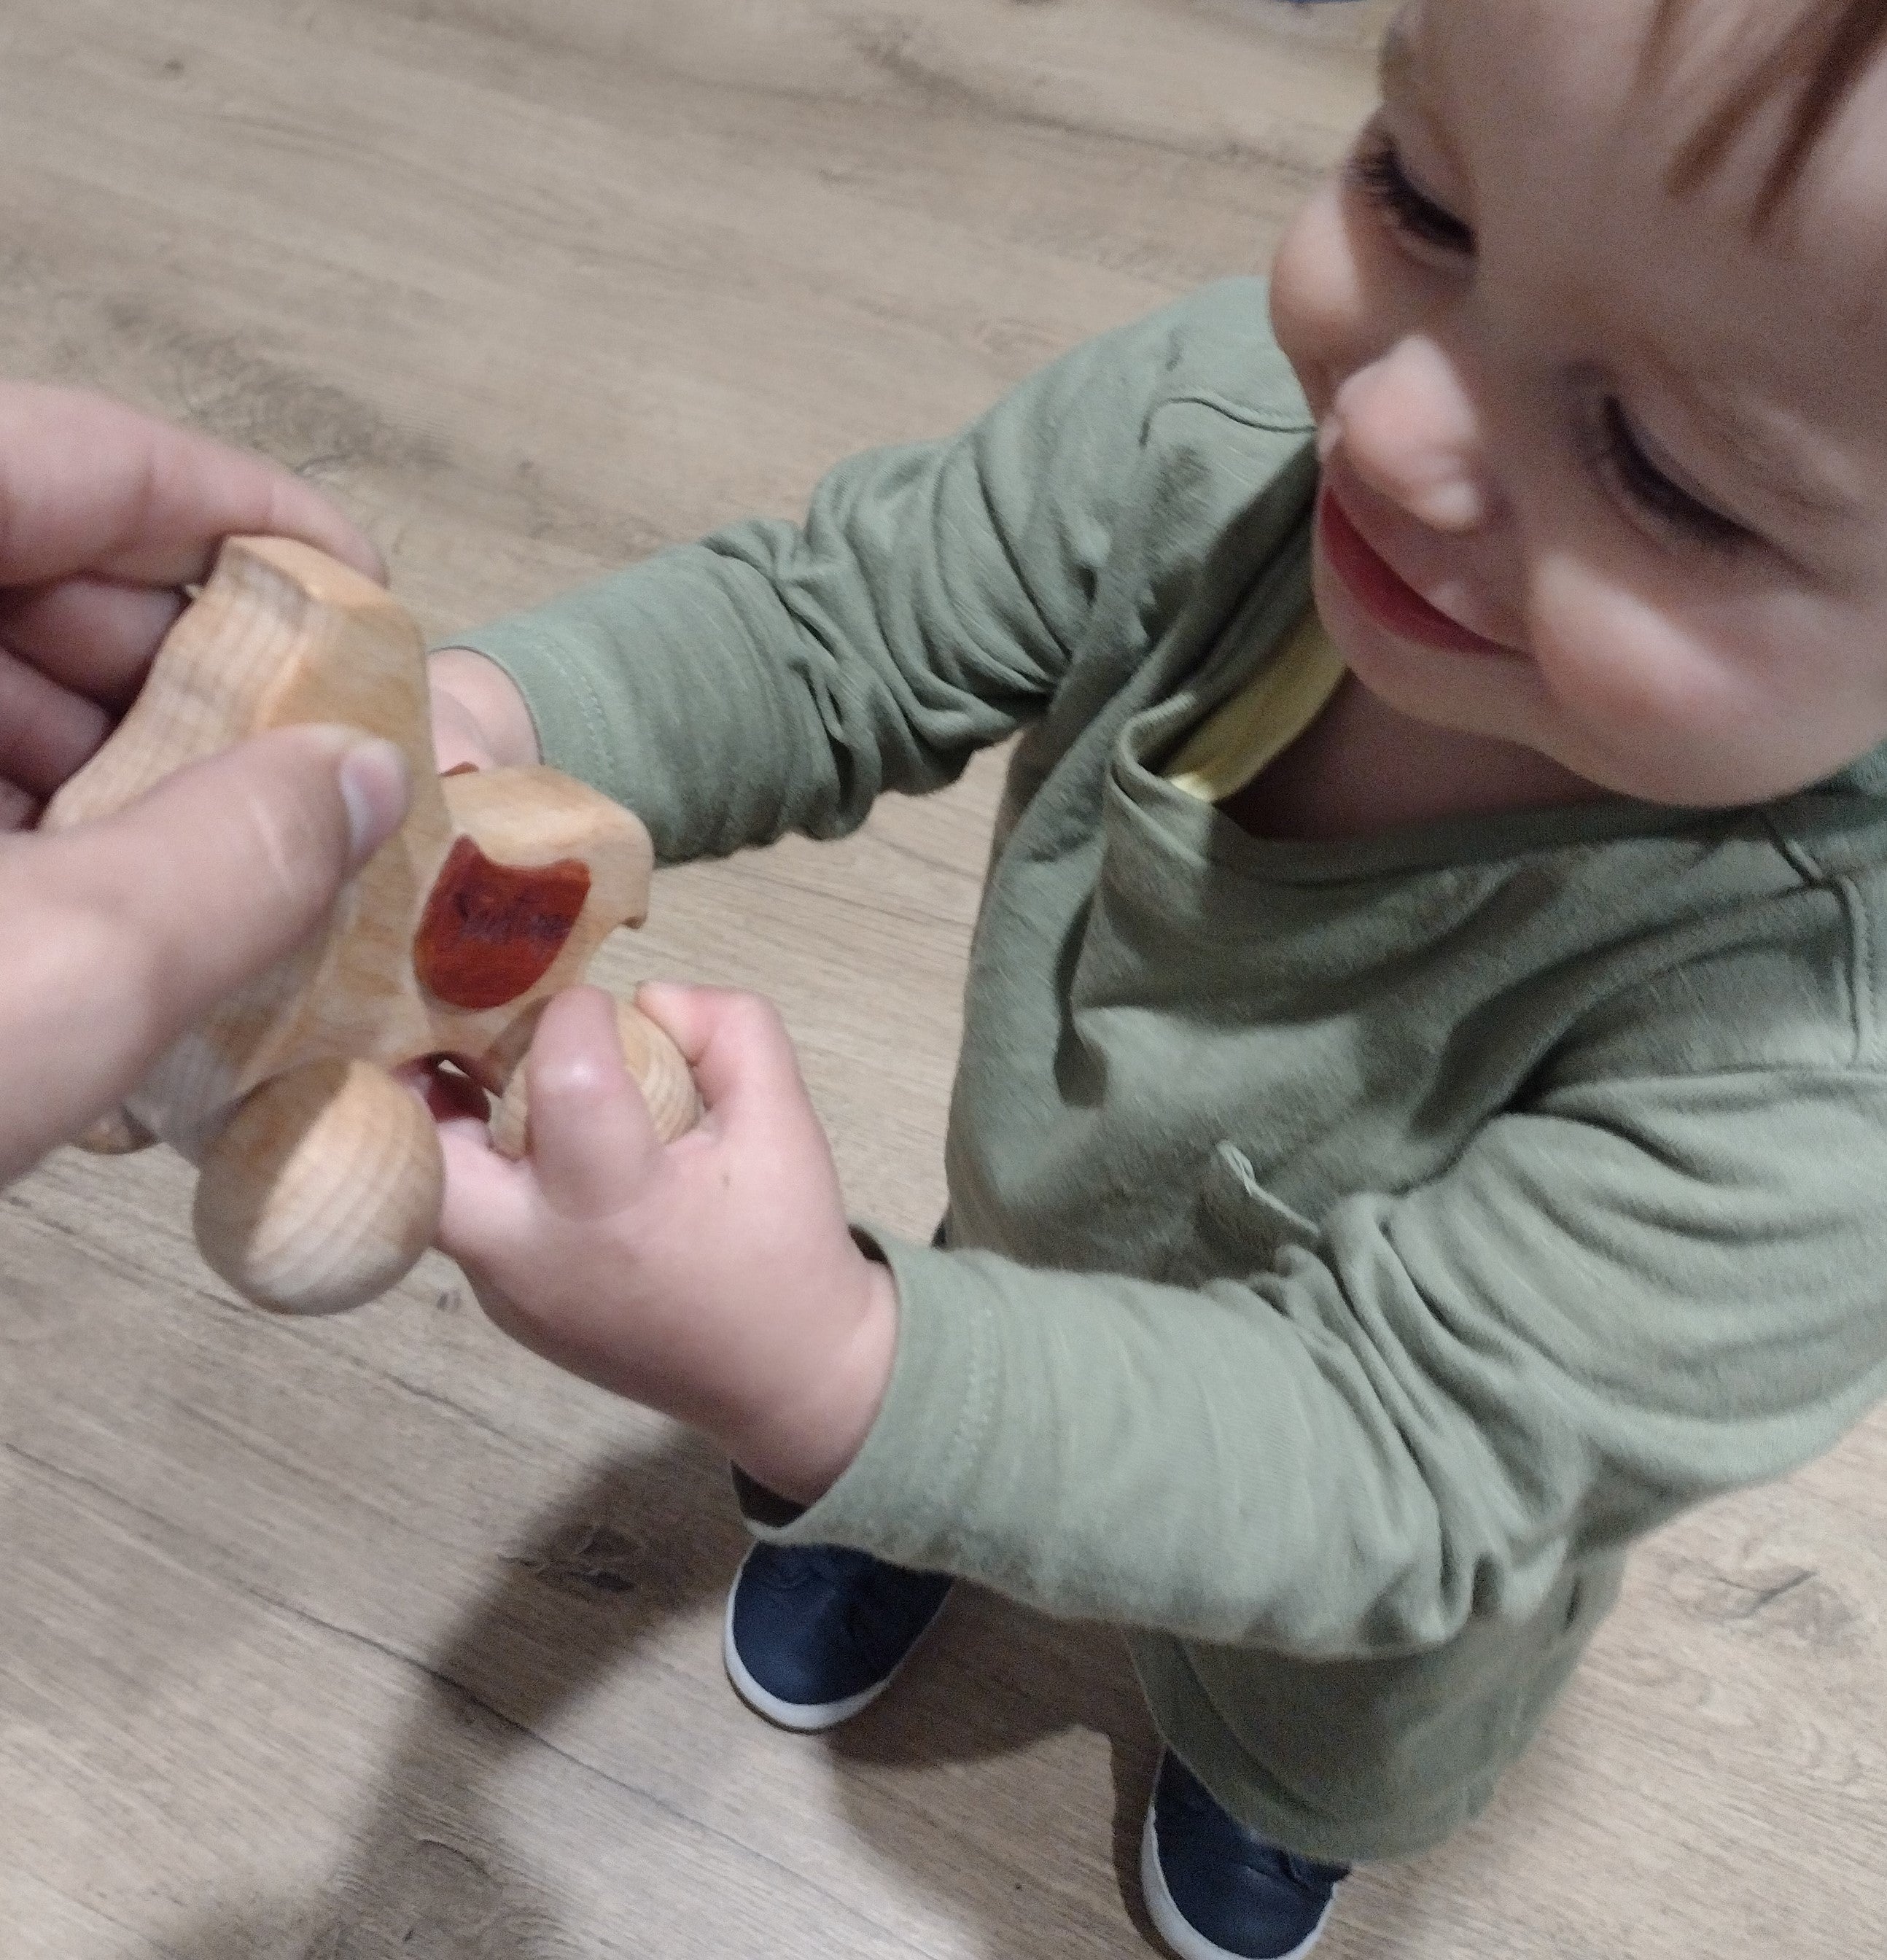 Montessori Wooden Baby Horse Toy